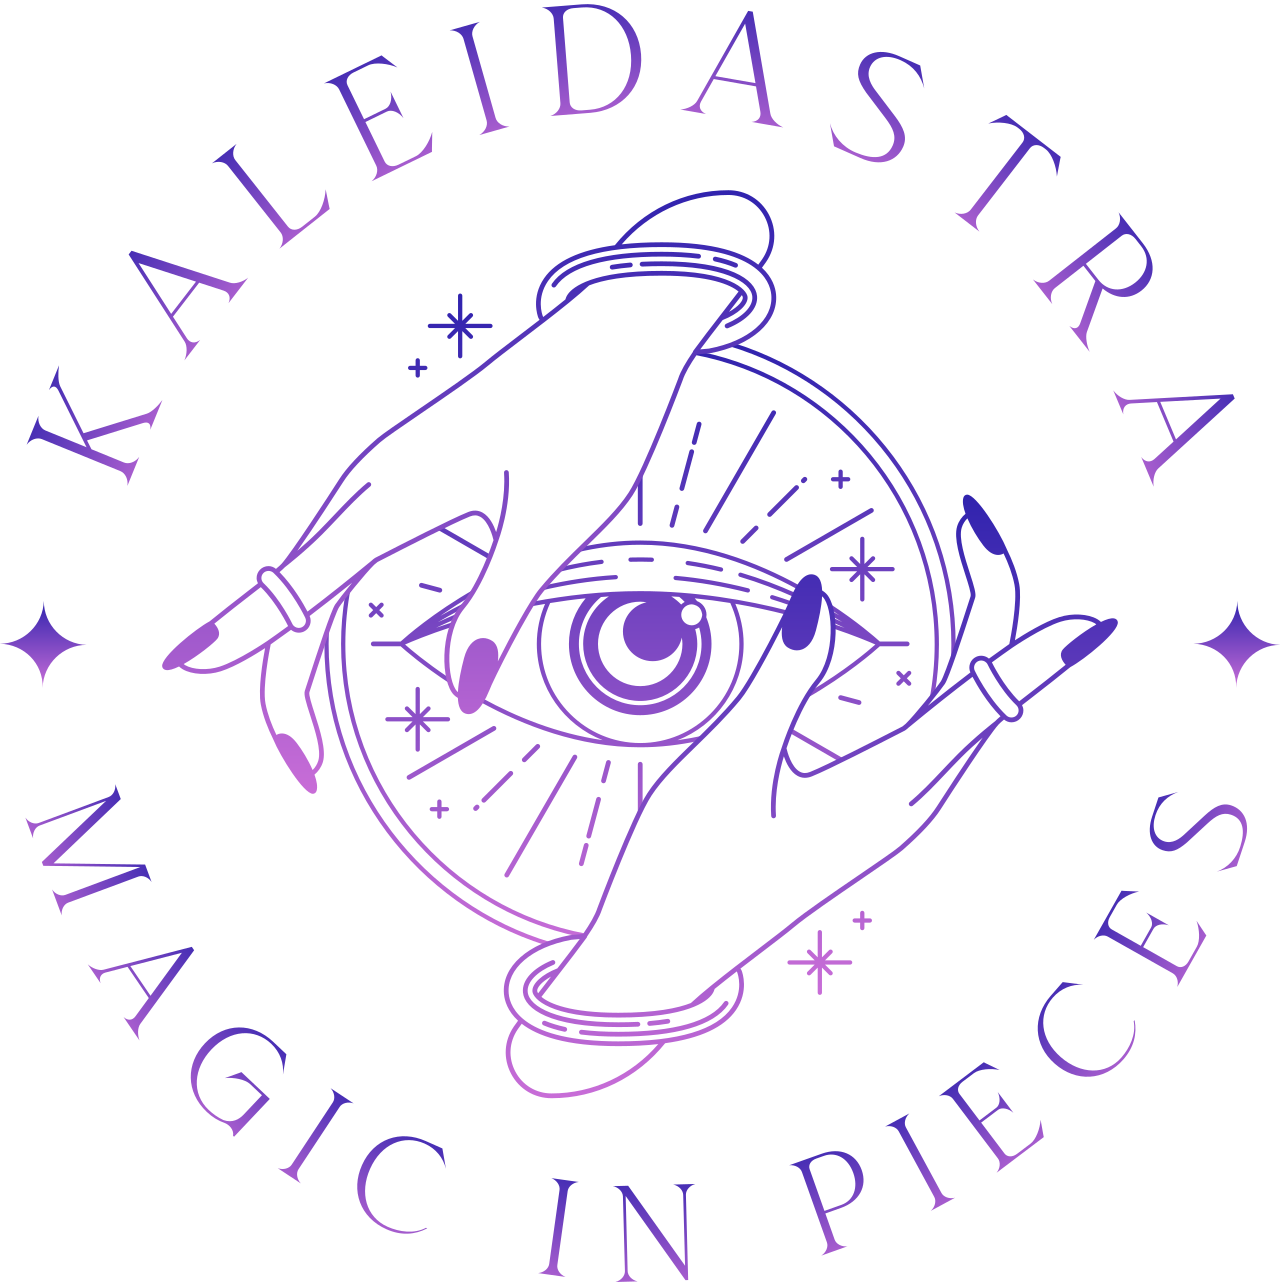 KALEIDASTRA's web page